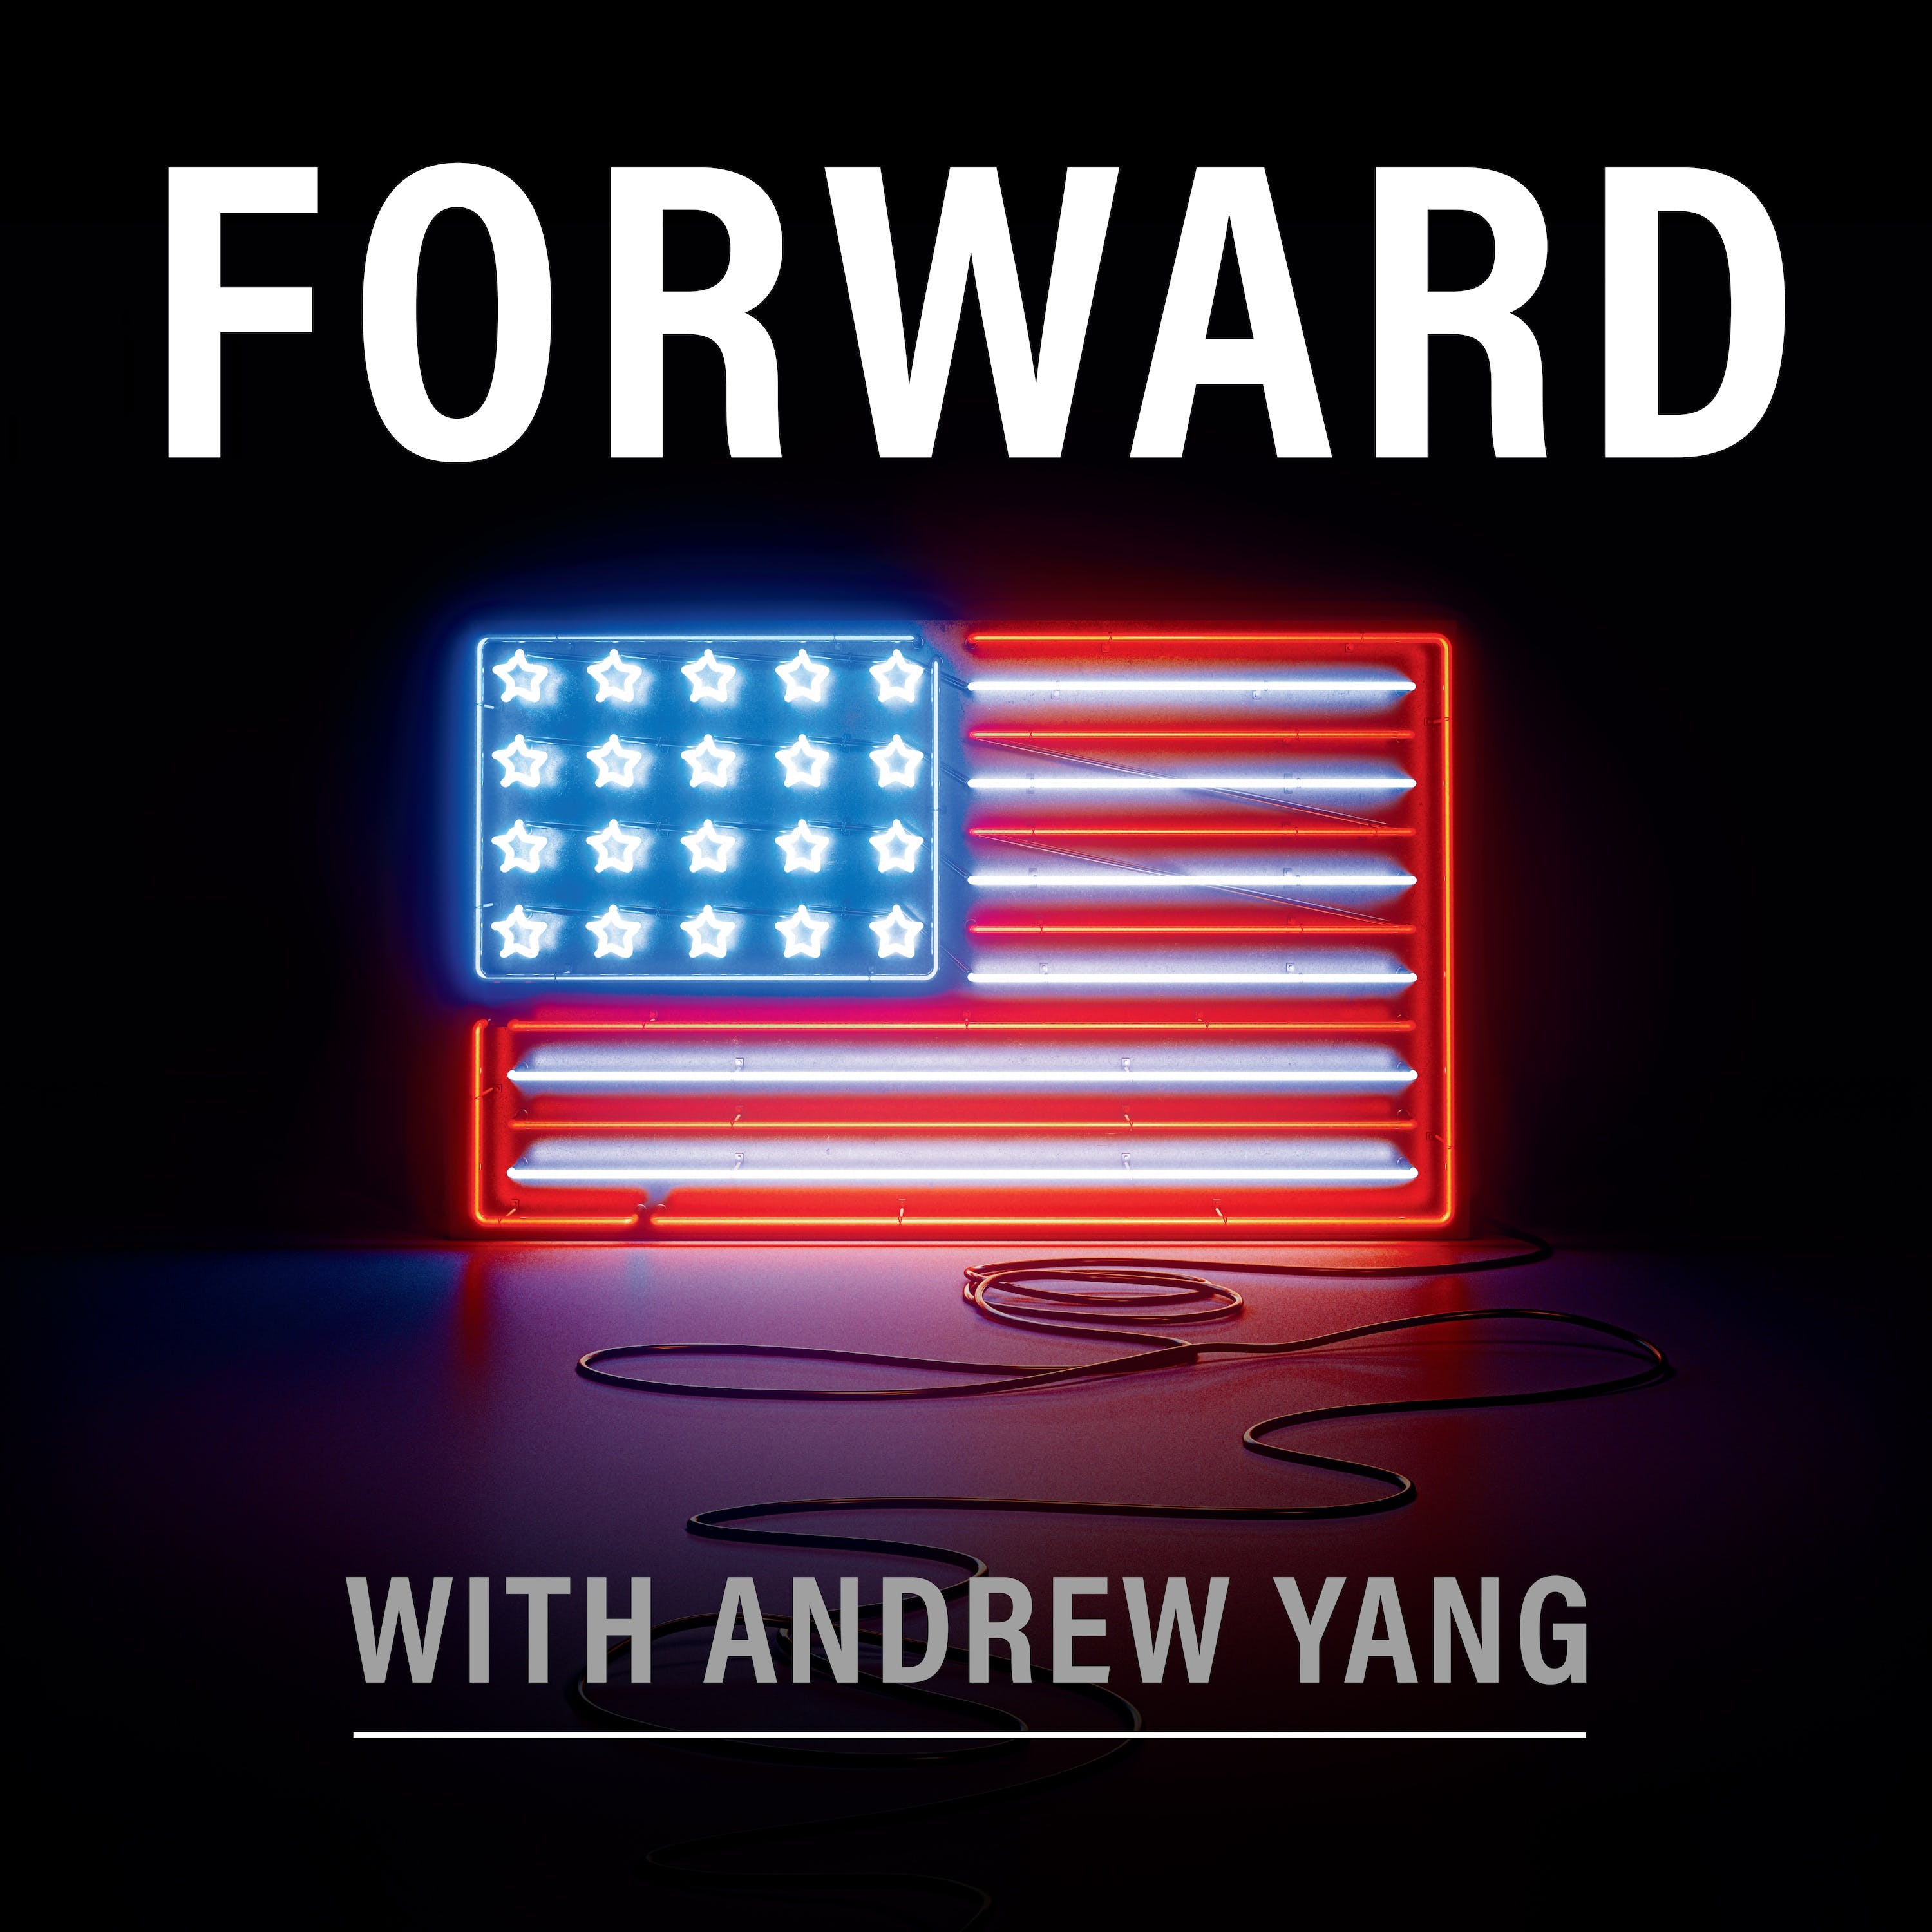 Andrew Yang Thinks Open Primaries Could Facilitate Gun Control Legislation